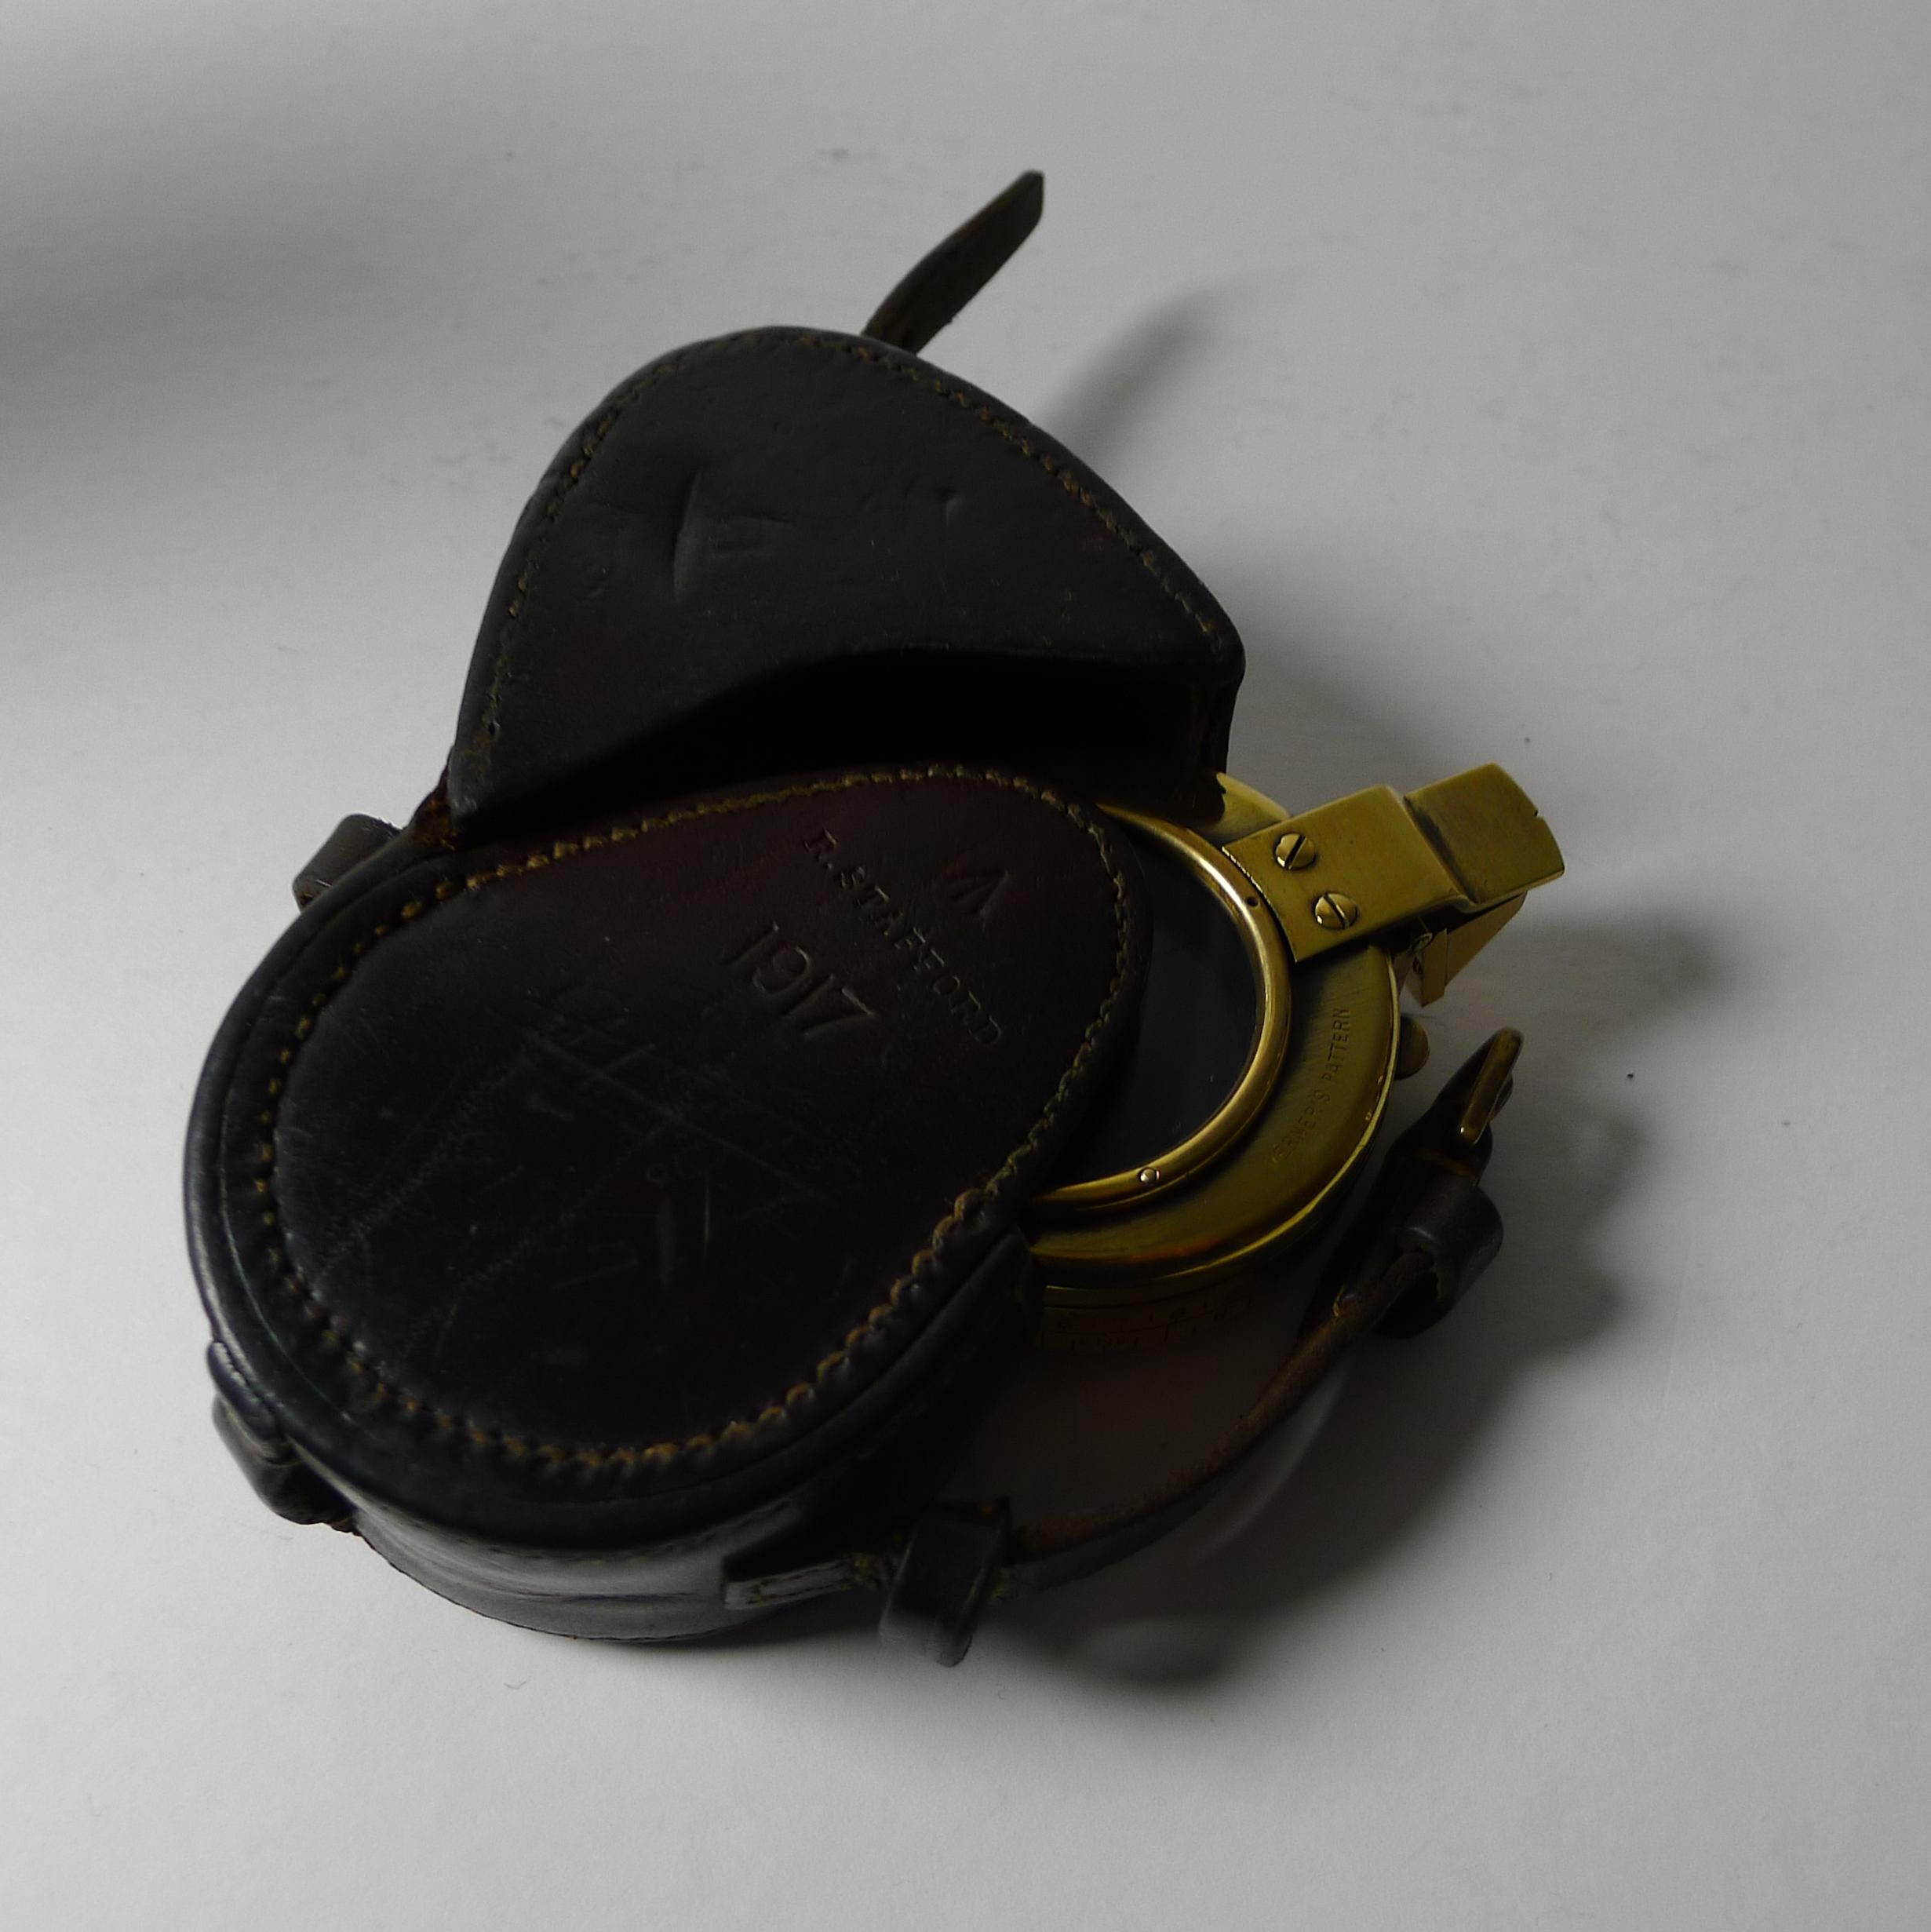 Brass WW1 1915 British Army Officer's Compass - Verner's Patent MK VII by E. Koehn